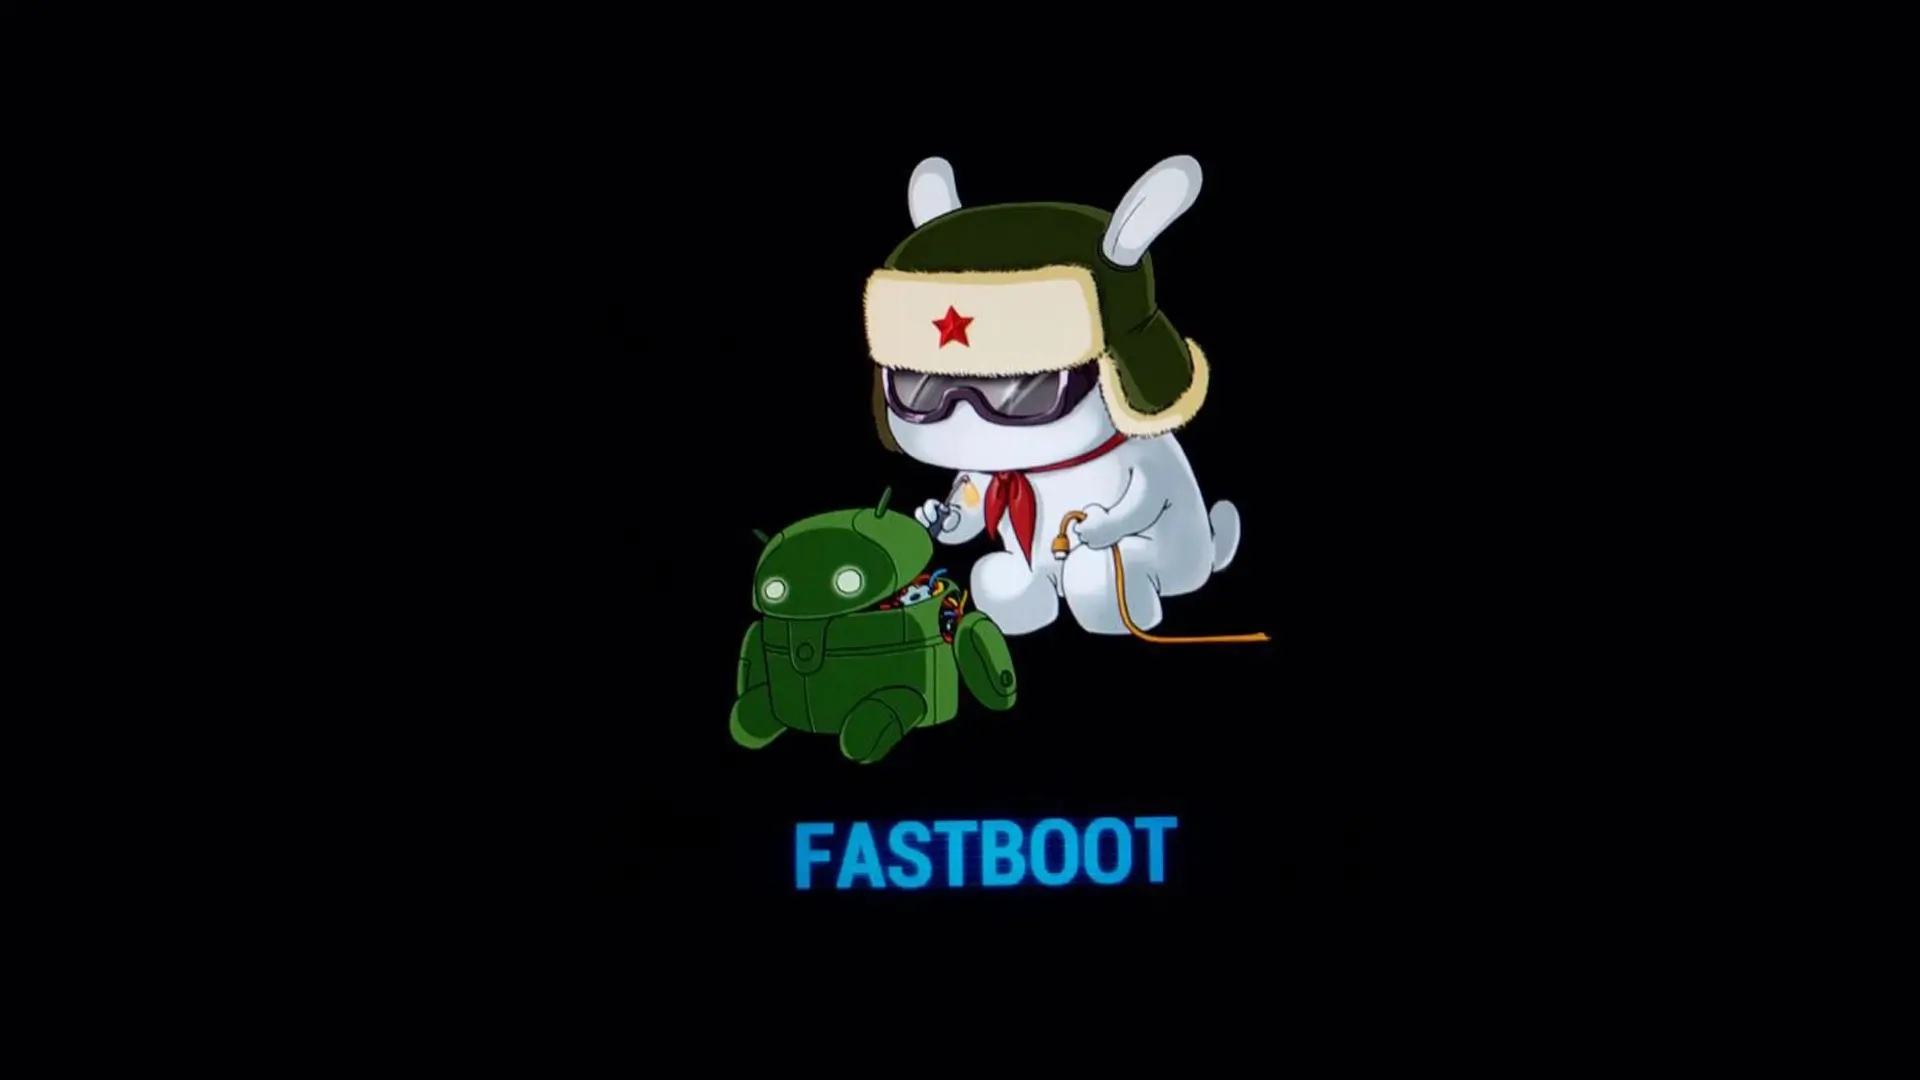 Xiaomi 9c Fastboot